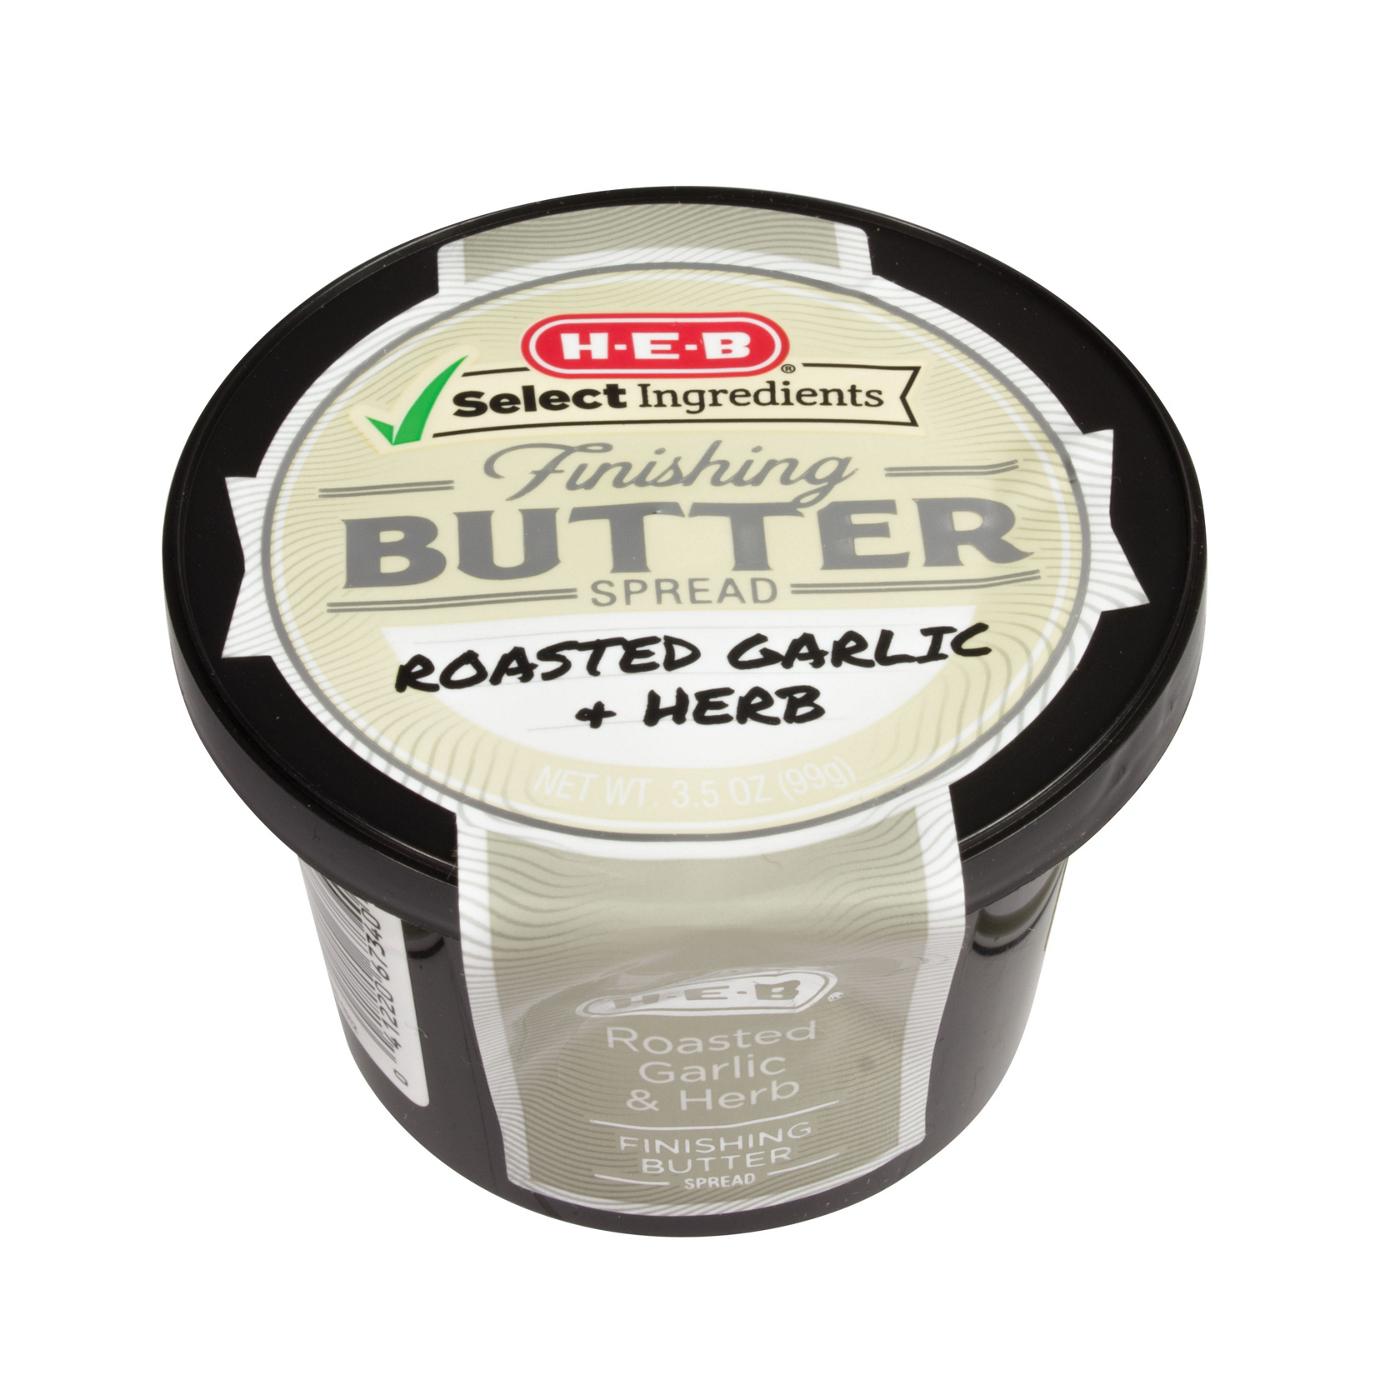 H-E-B Roasted Garlic & Herb Finishing Butter; image 1 of 2